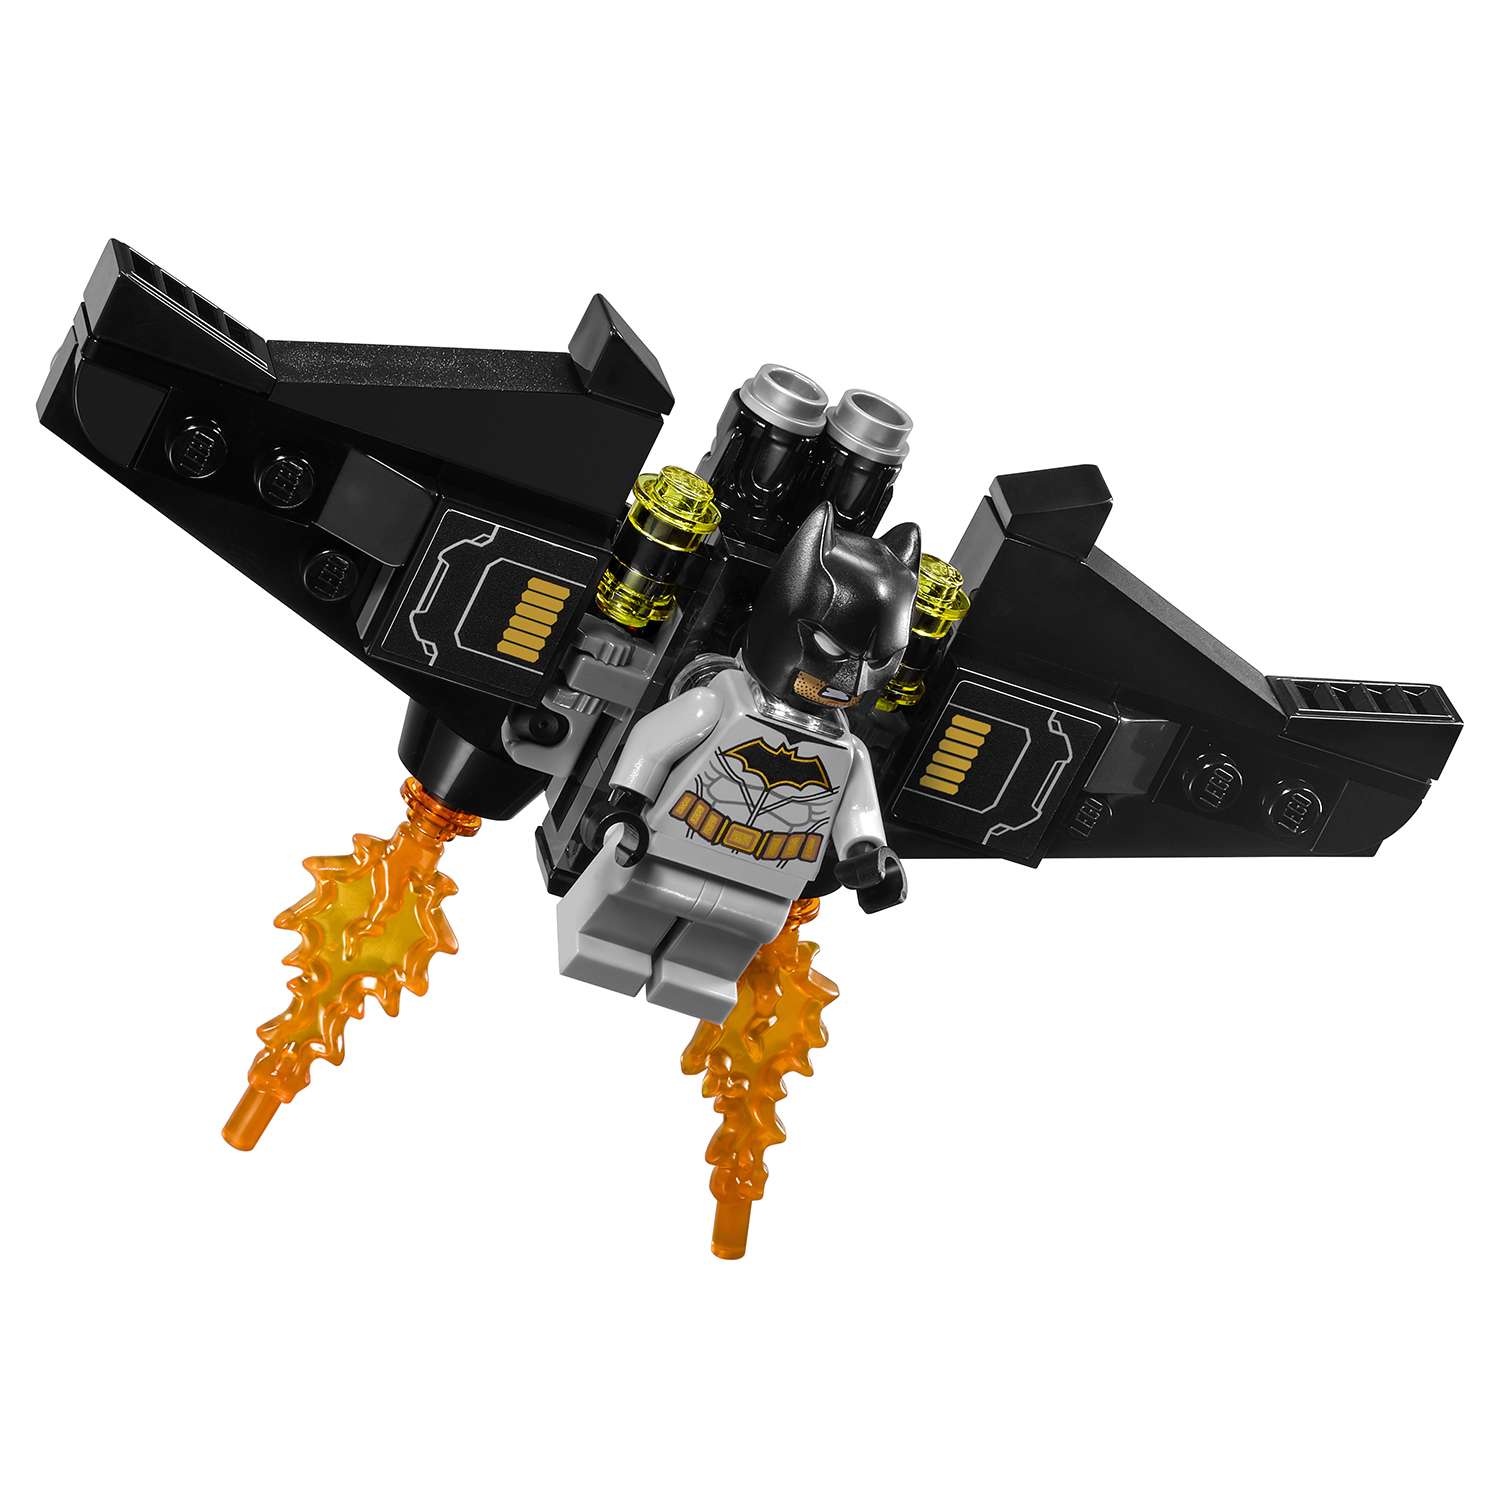 Конструктор LEGO Сражение с роботом Лекса Лютора Super Heroes (76097) - фото 15